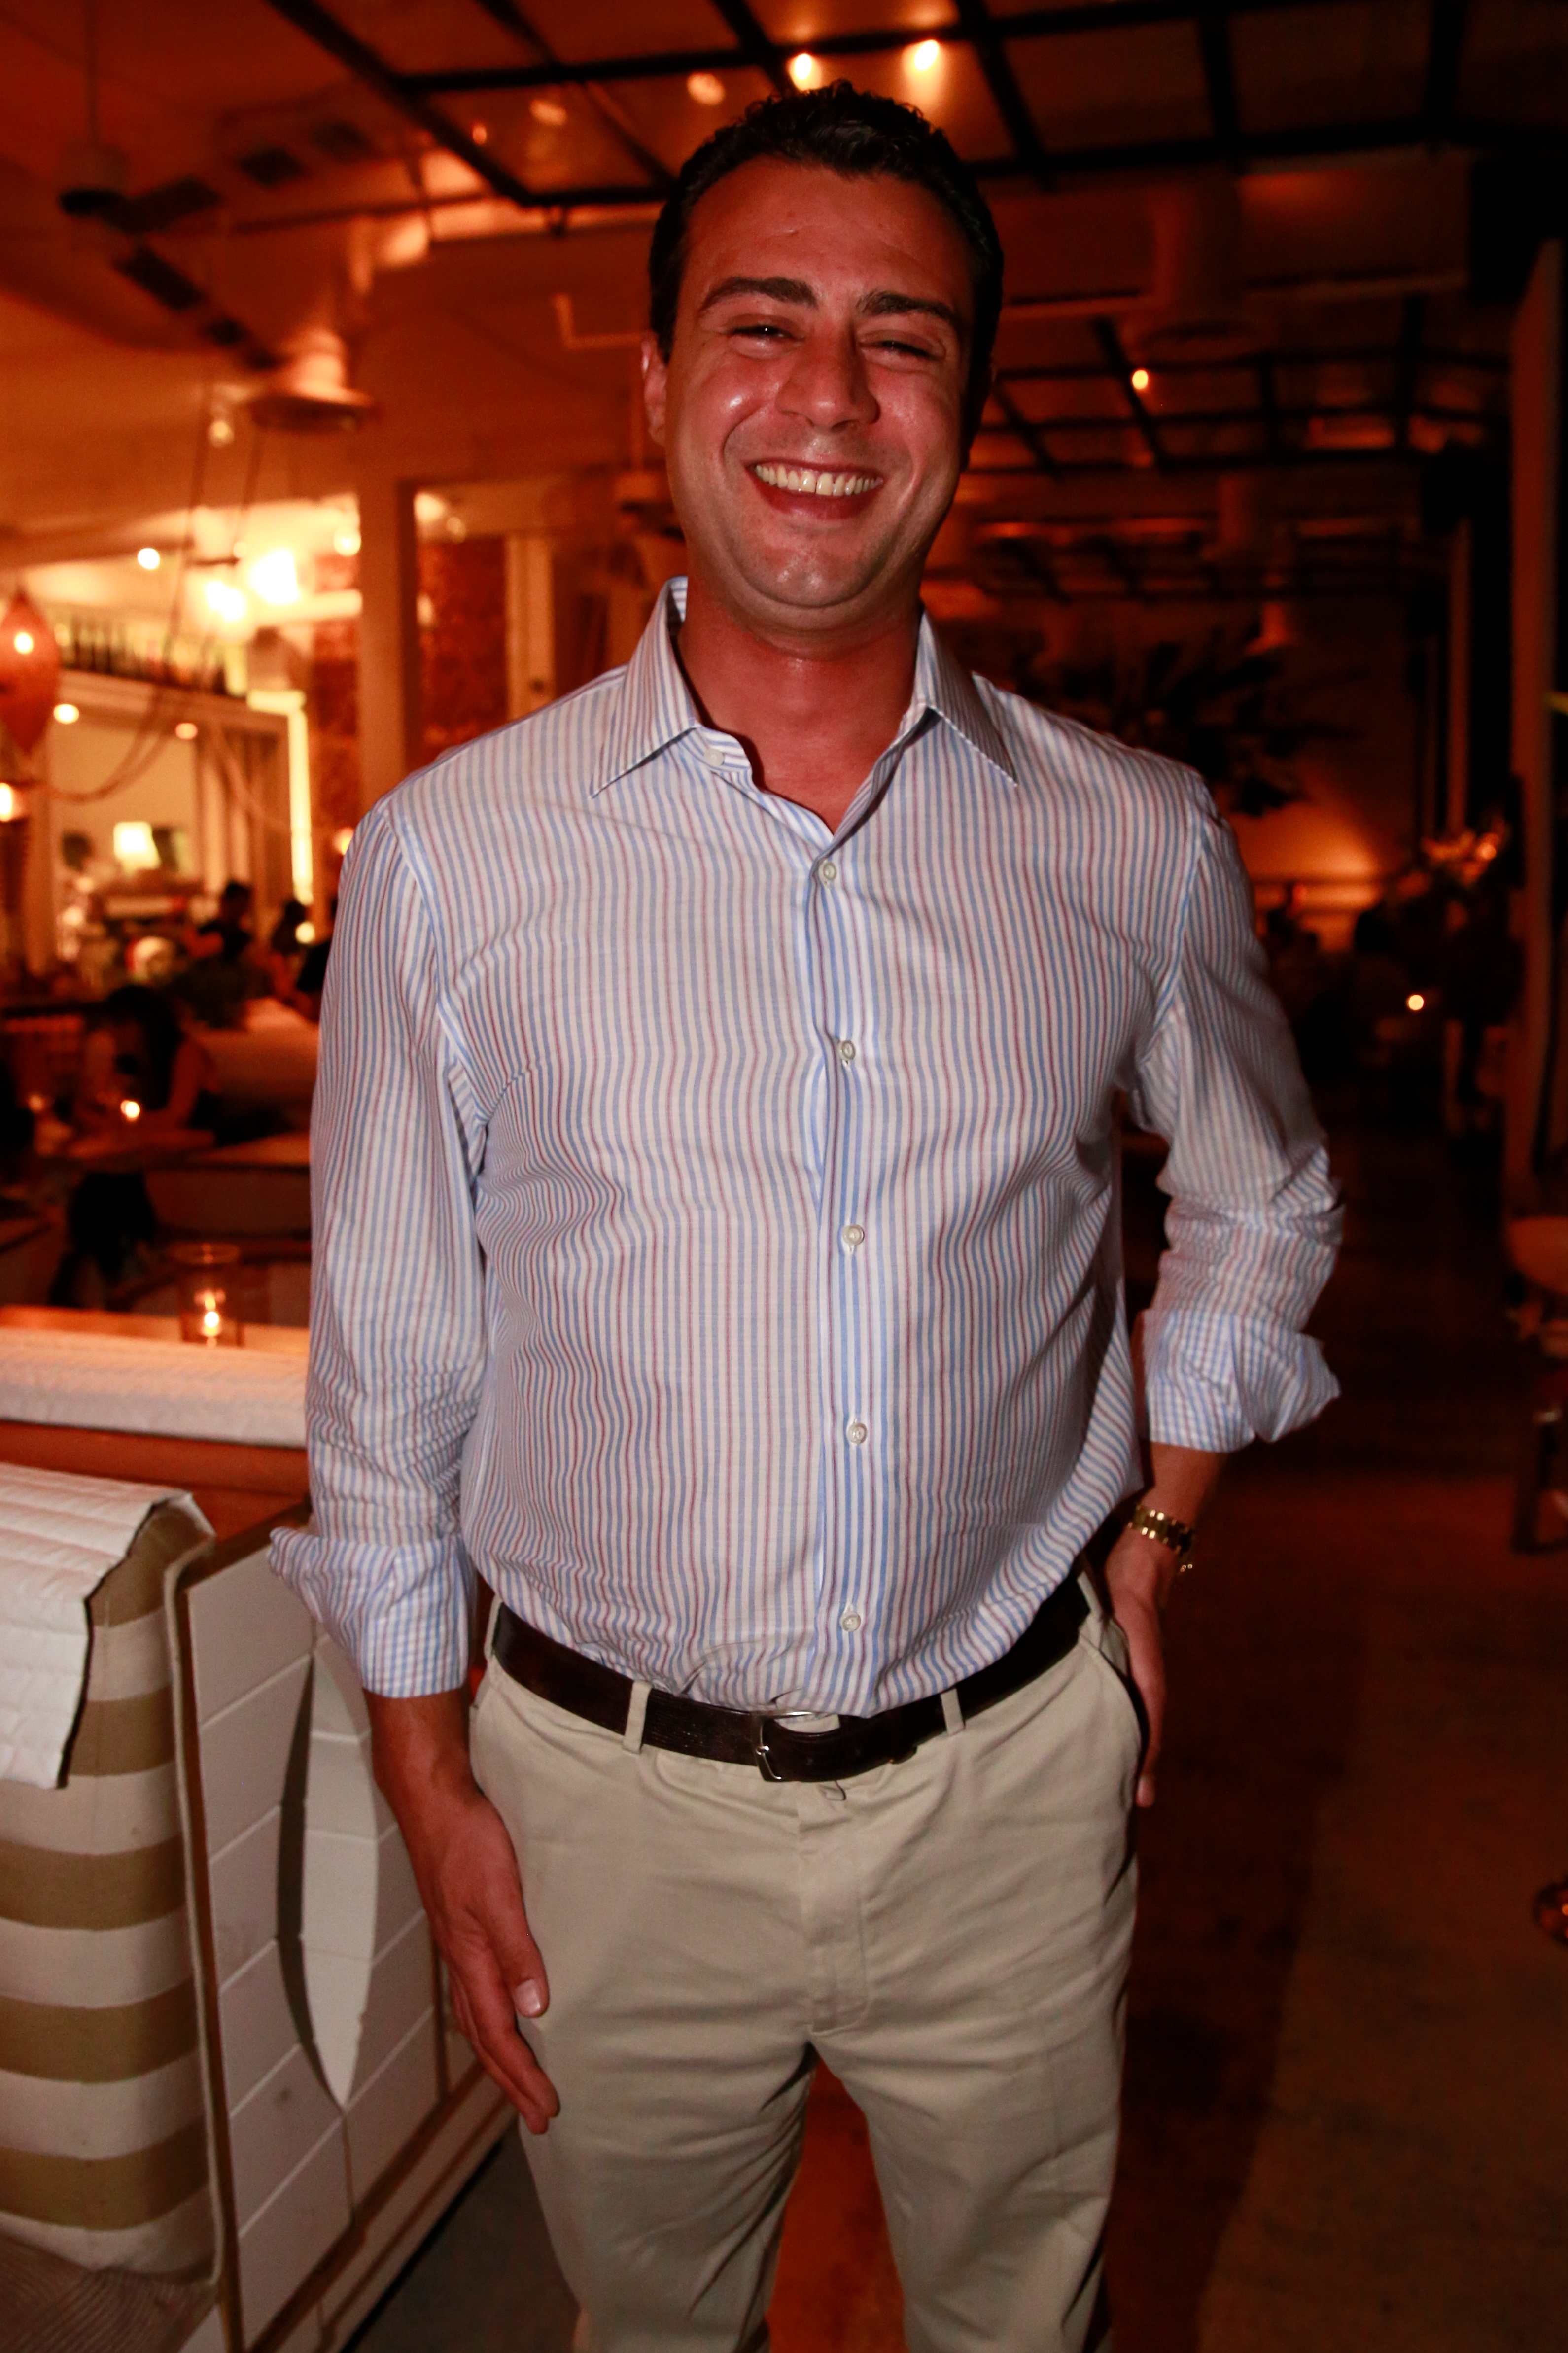 Raphael De Niro in Miami, Florida am 22. März 2014 | Quelle: Getty Images